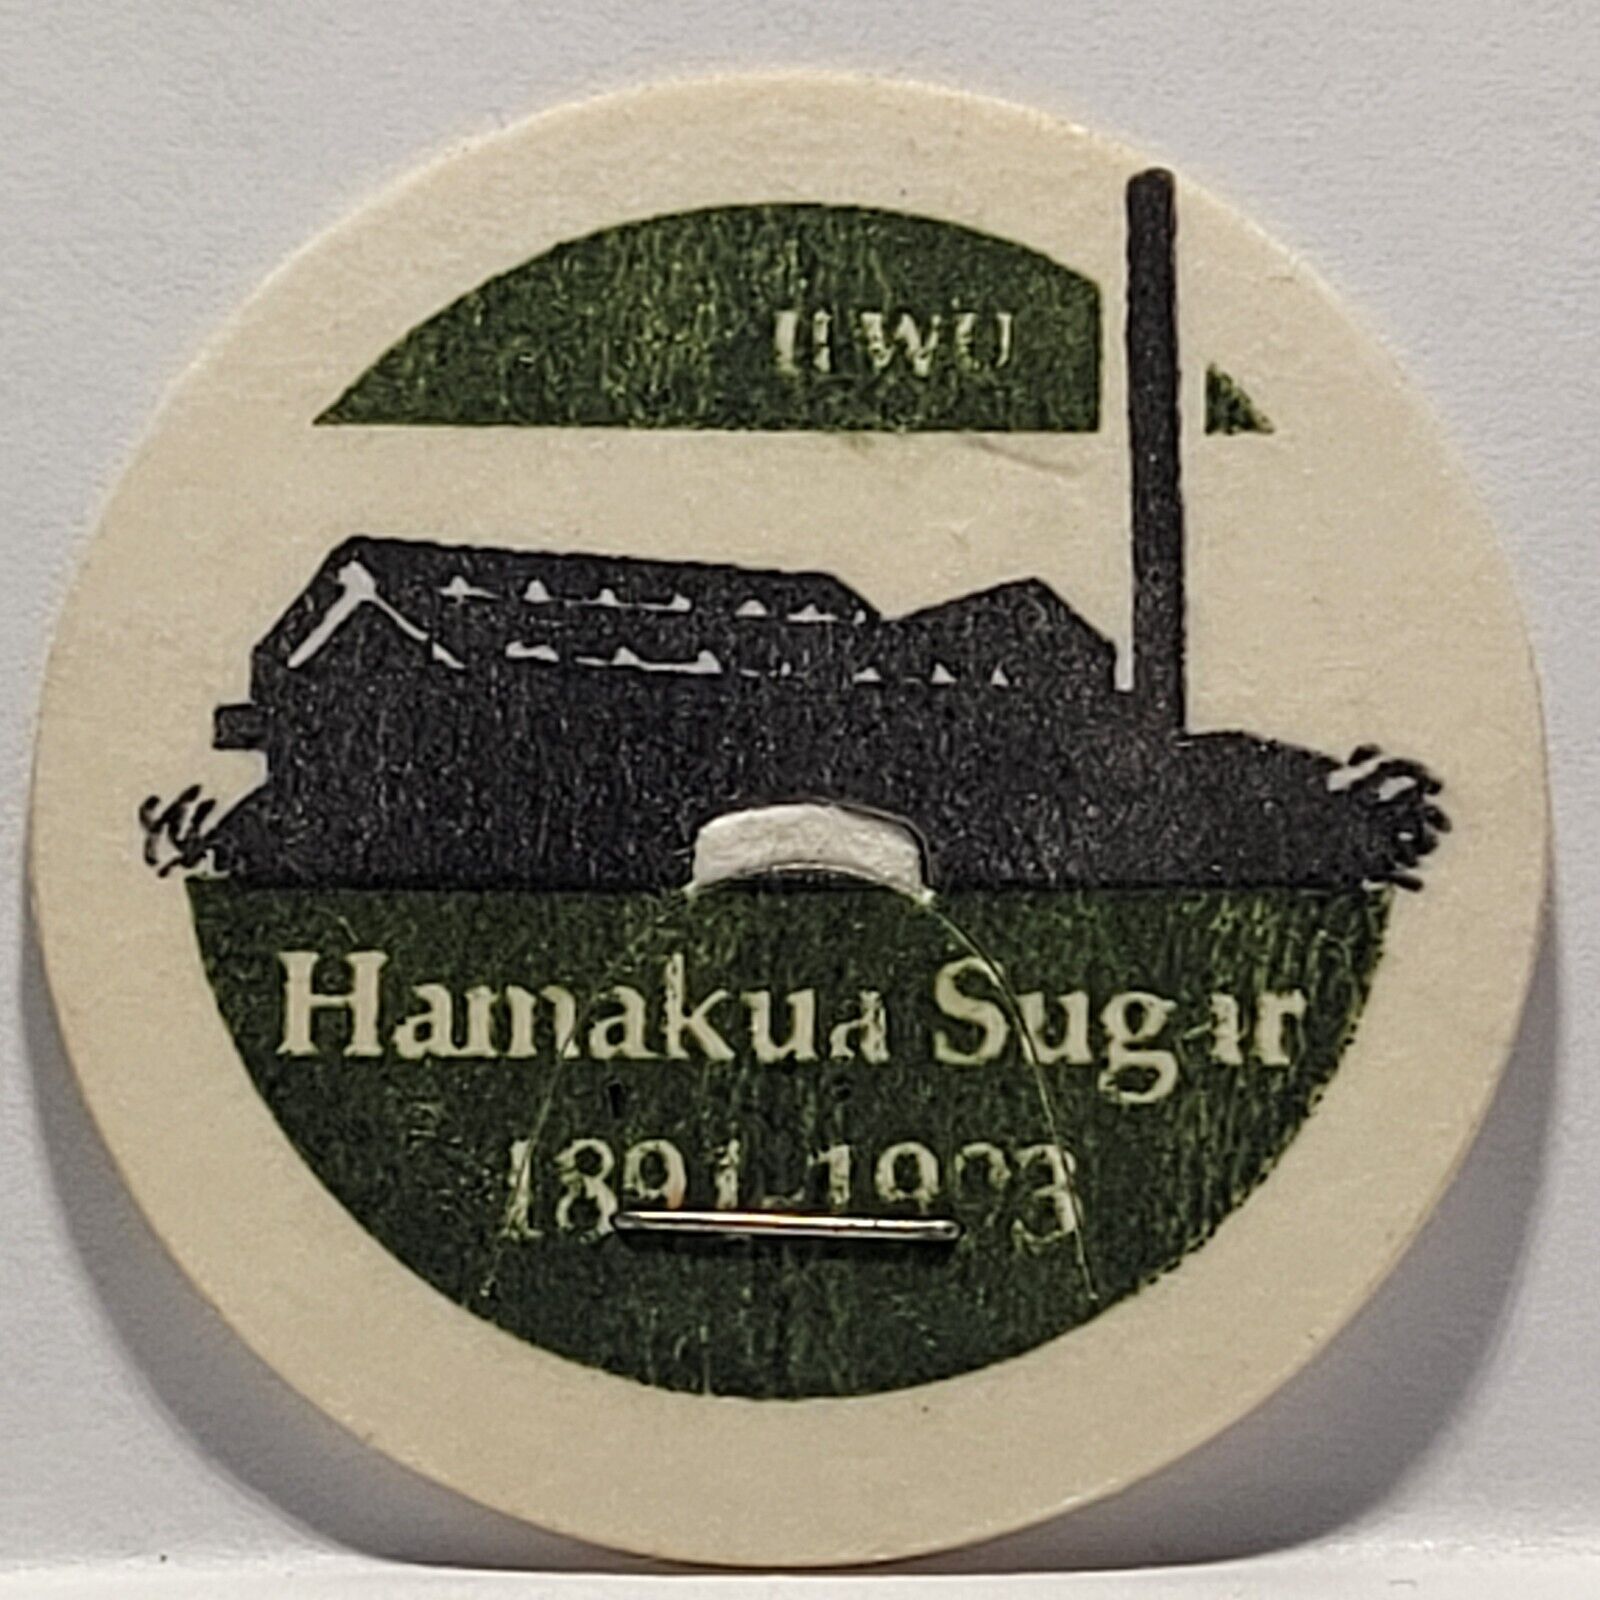 Vintage Pog * Hamakua Sugar 1891 - 1993 * Bin23